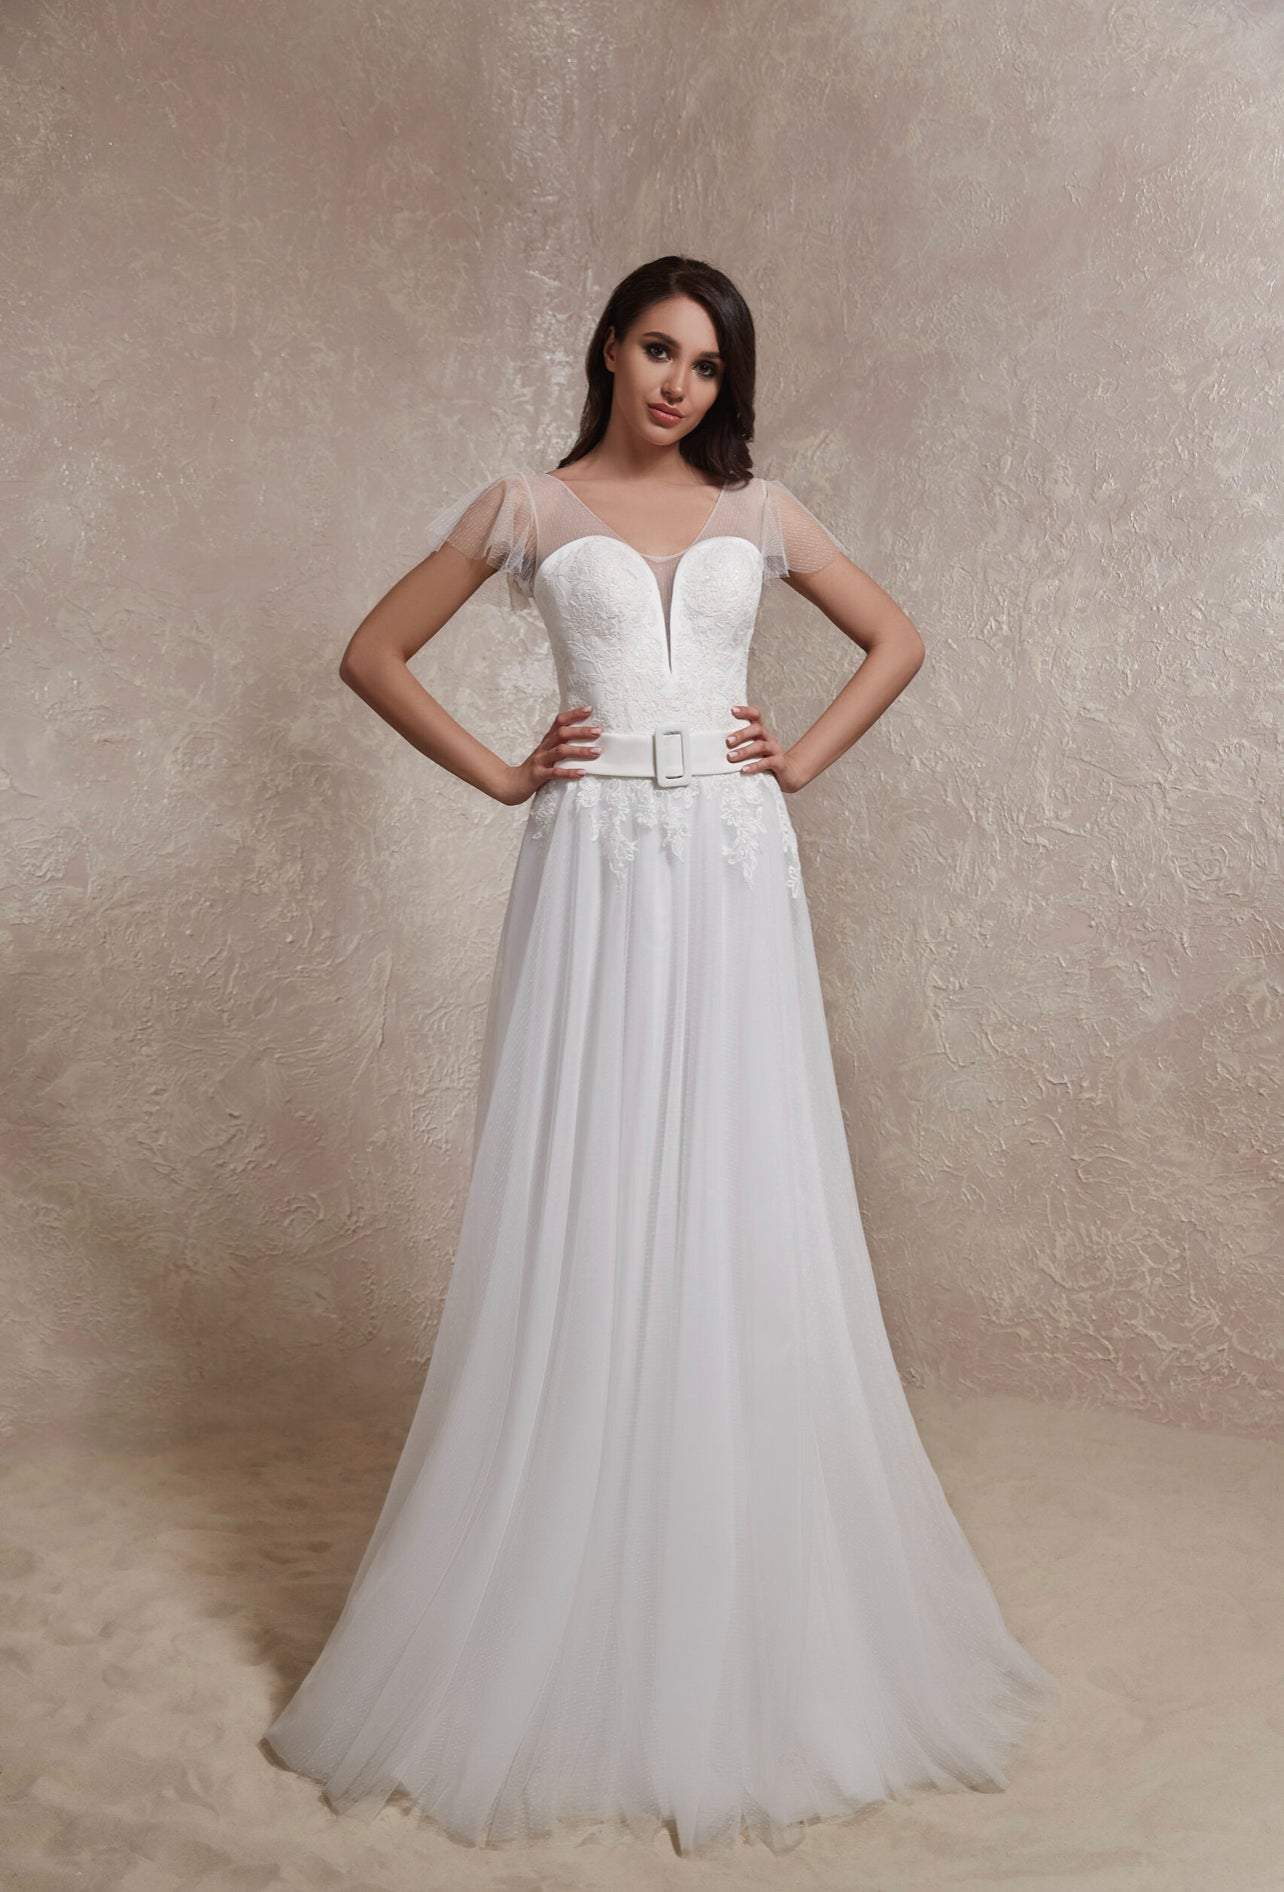 Snowbird White Wedding Dress-danddclothing-A-line,Classic Elegant Gowns,Royal Wedding Dresses,White